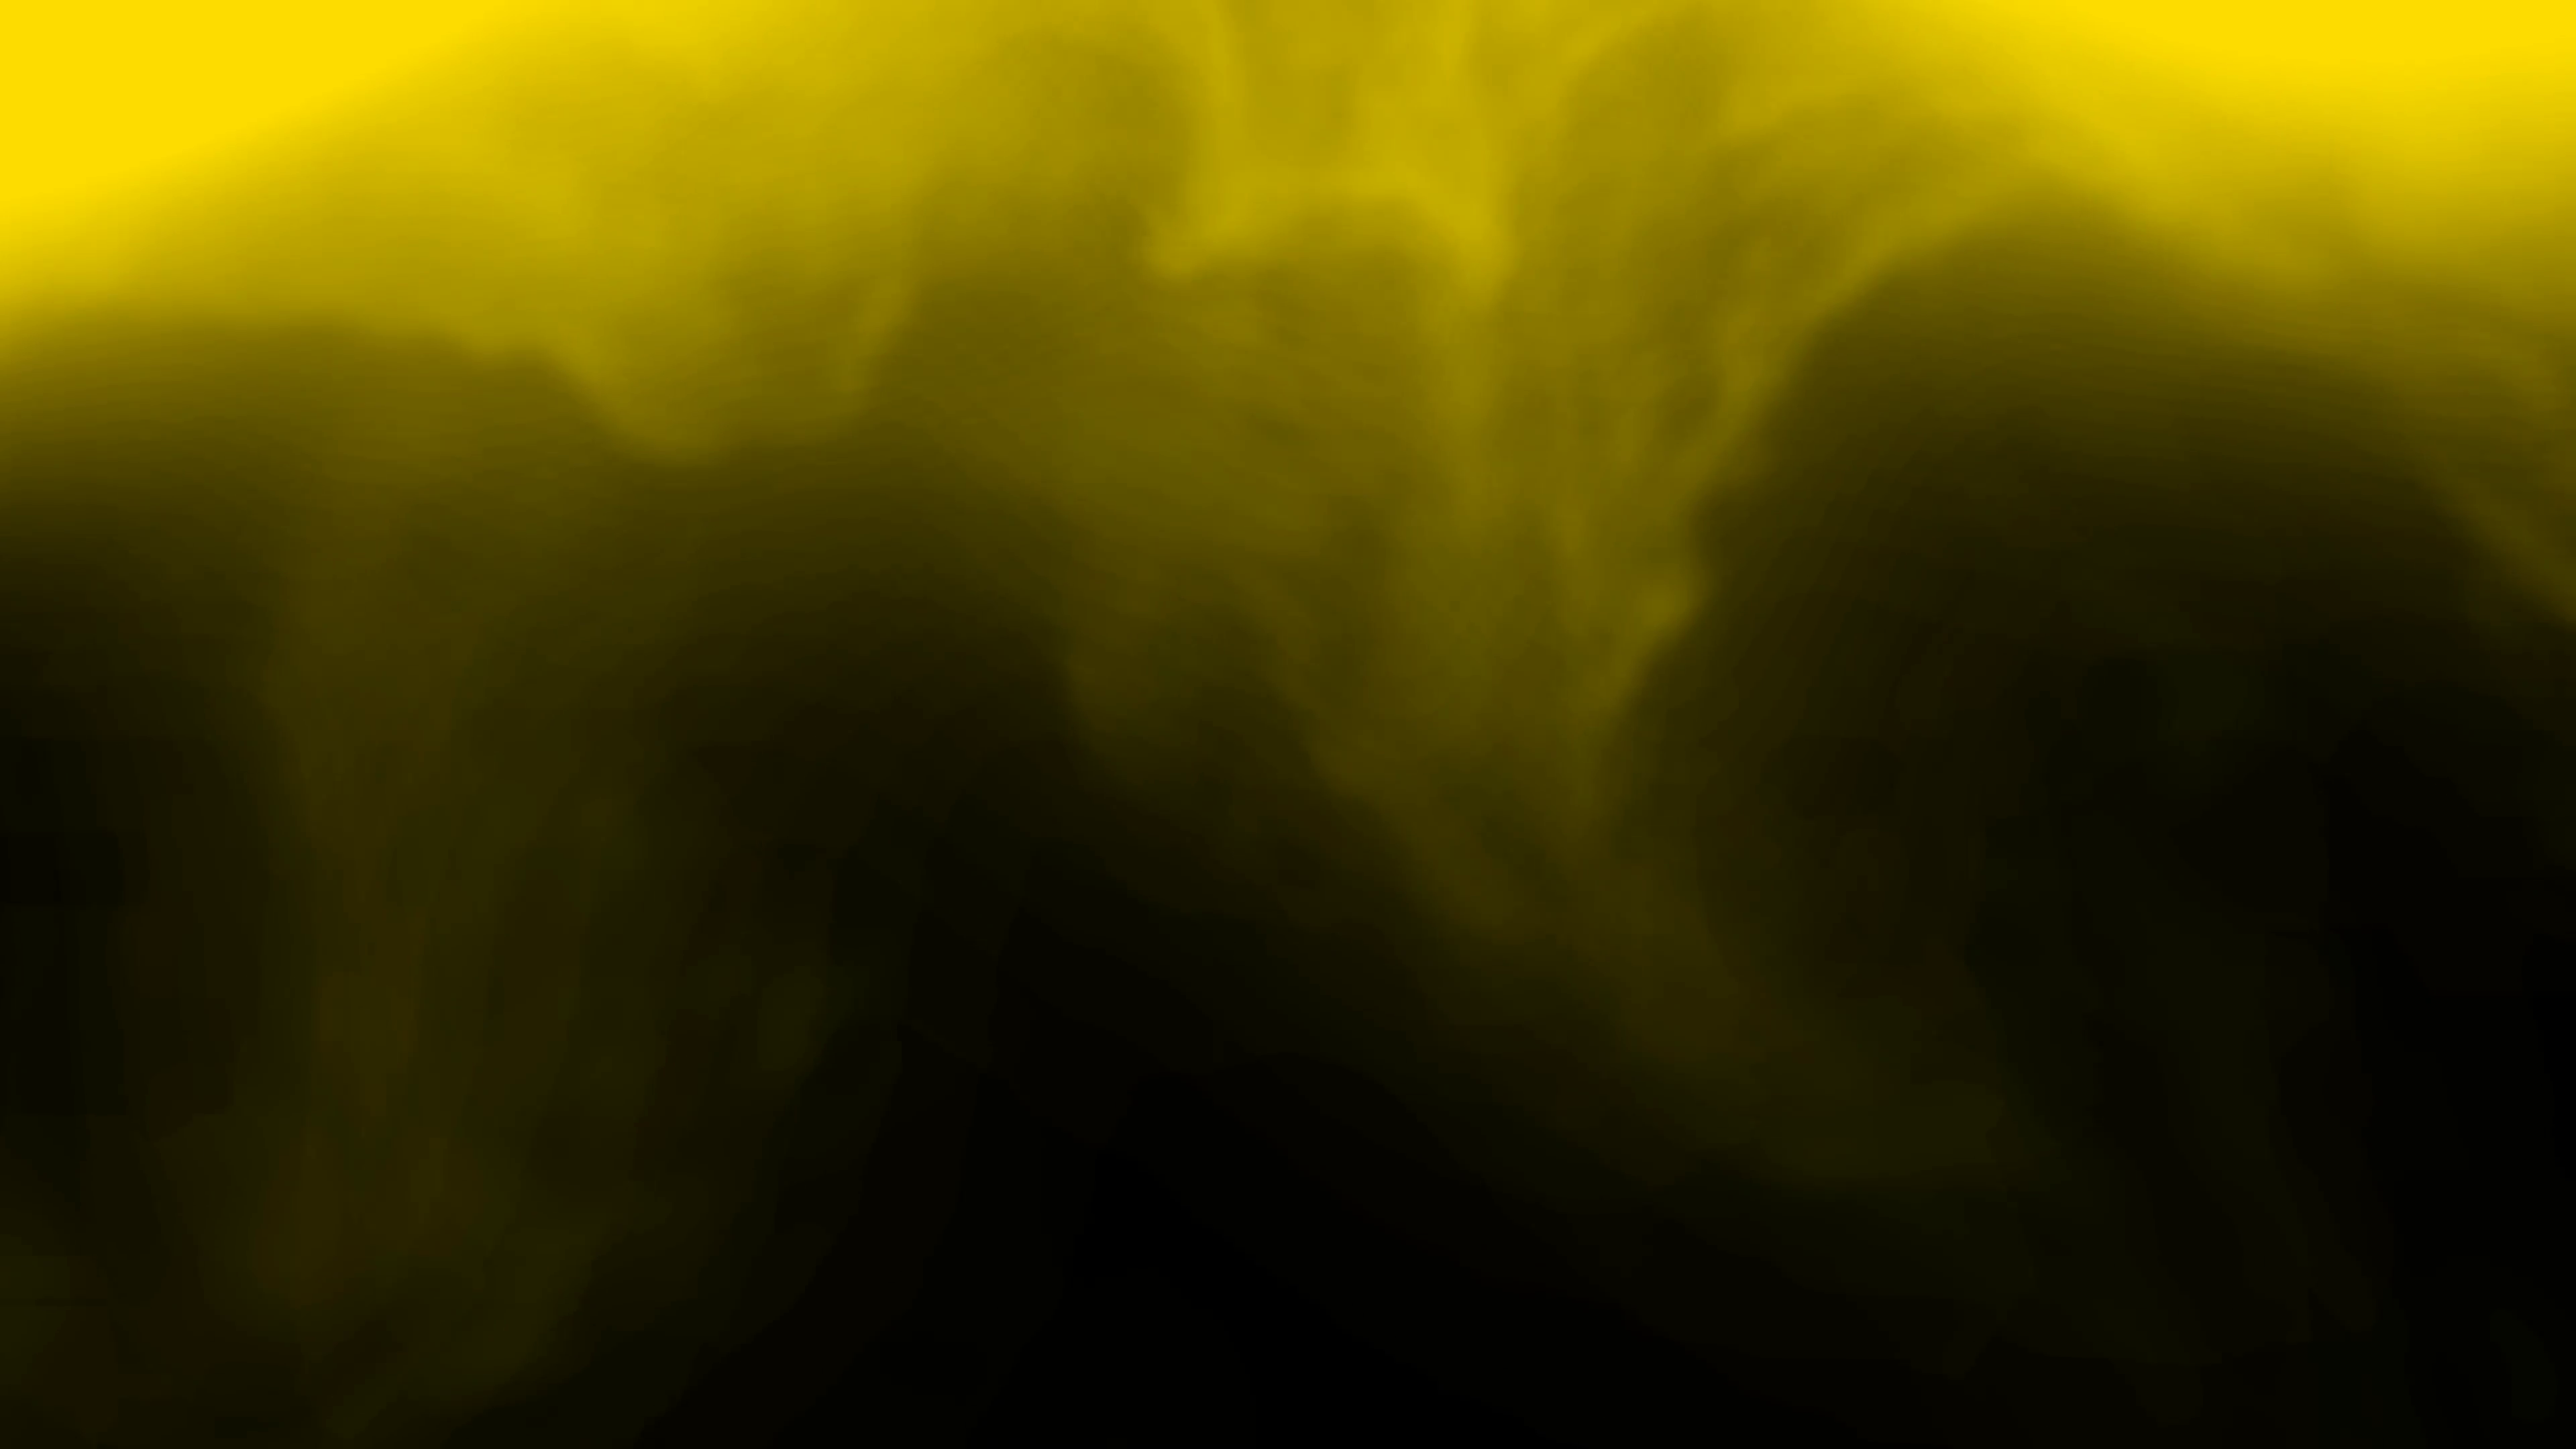 Animated glowing yellow smoke or gas descending (falloff) slowly ...